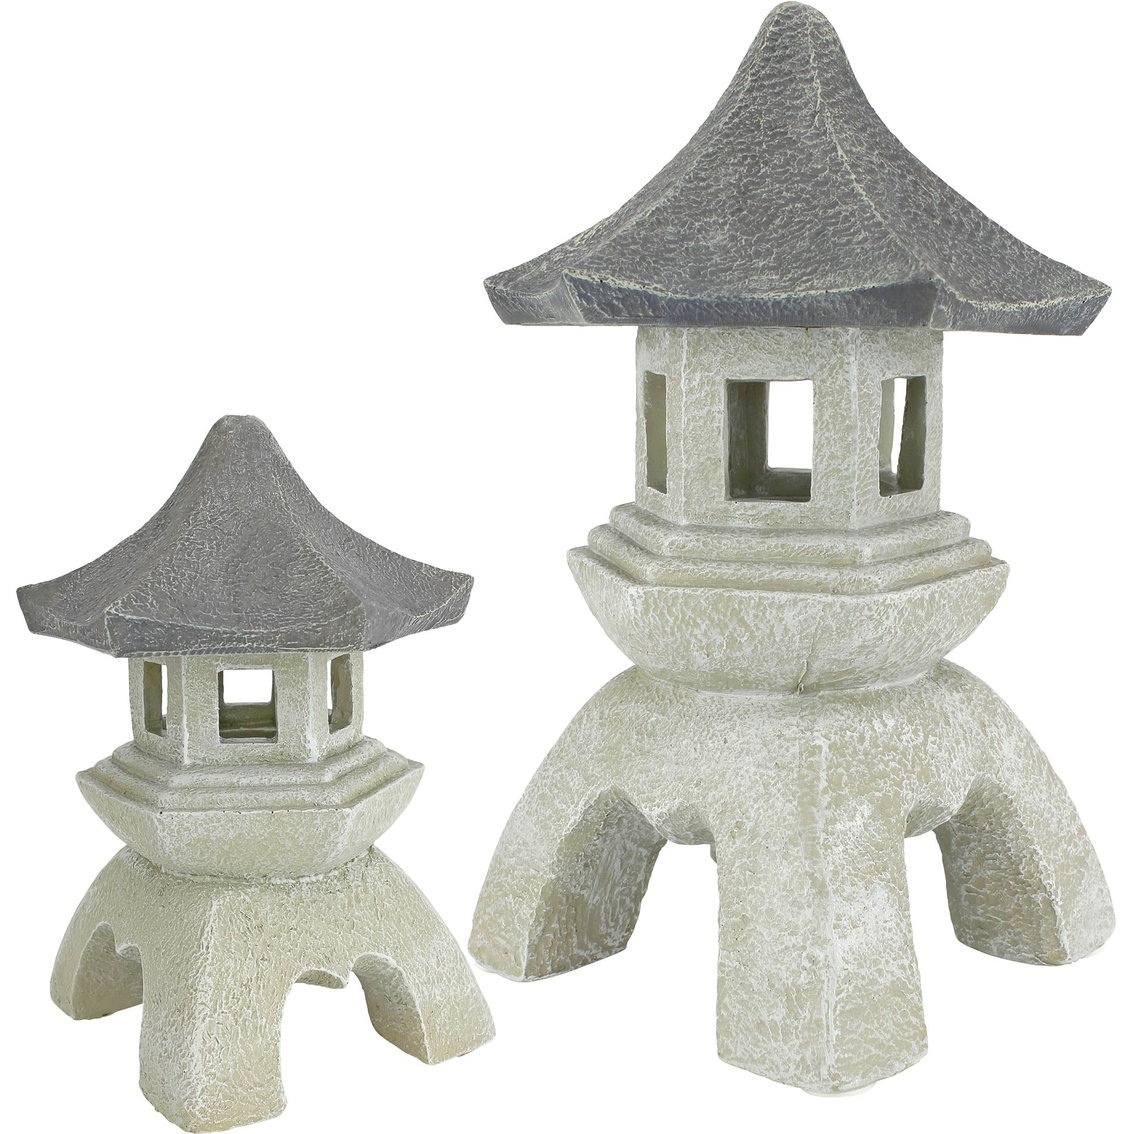 Design Toscano Pagoda Lantern Sculptures, Set of 2